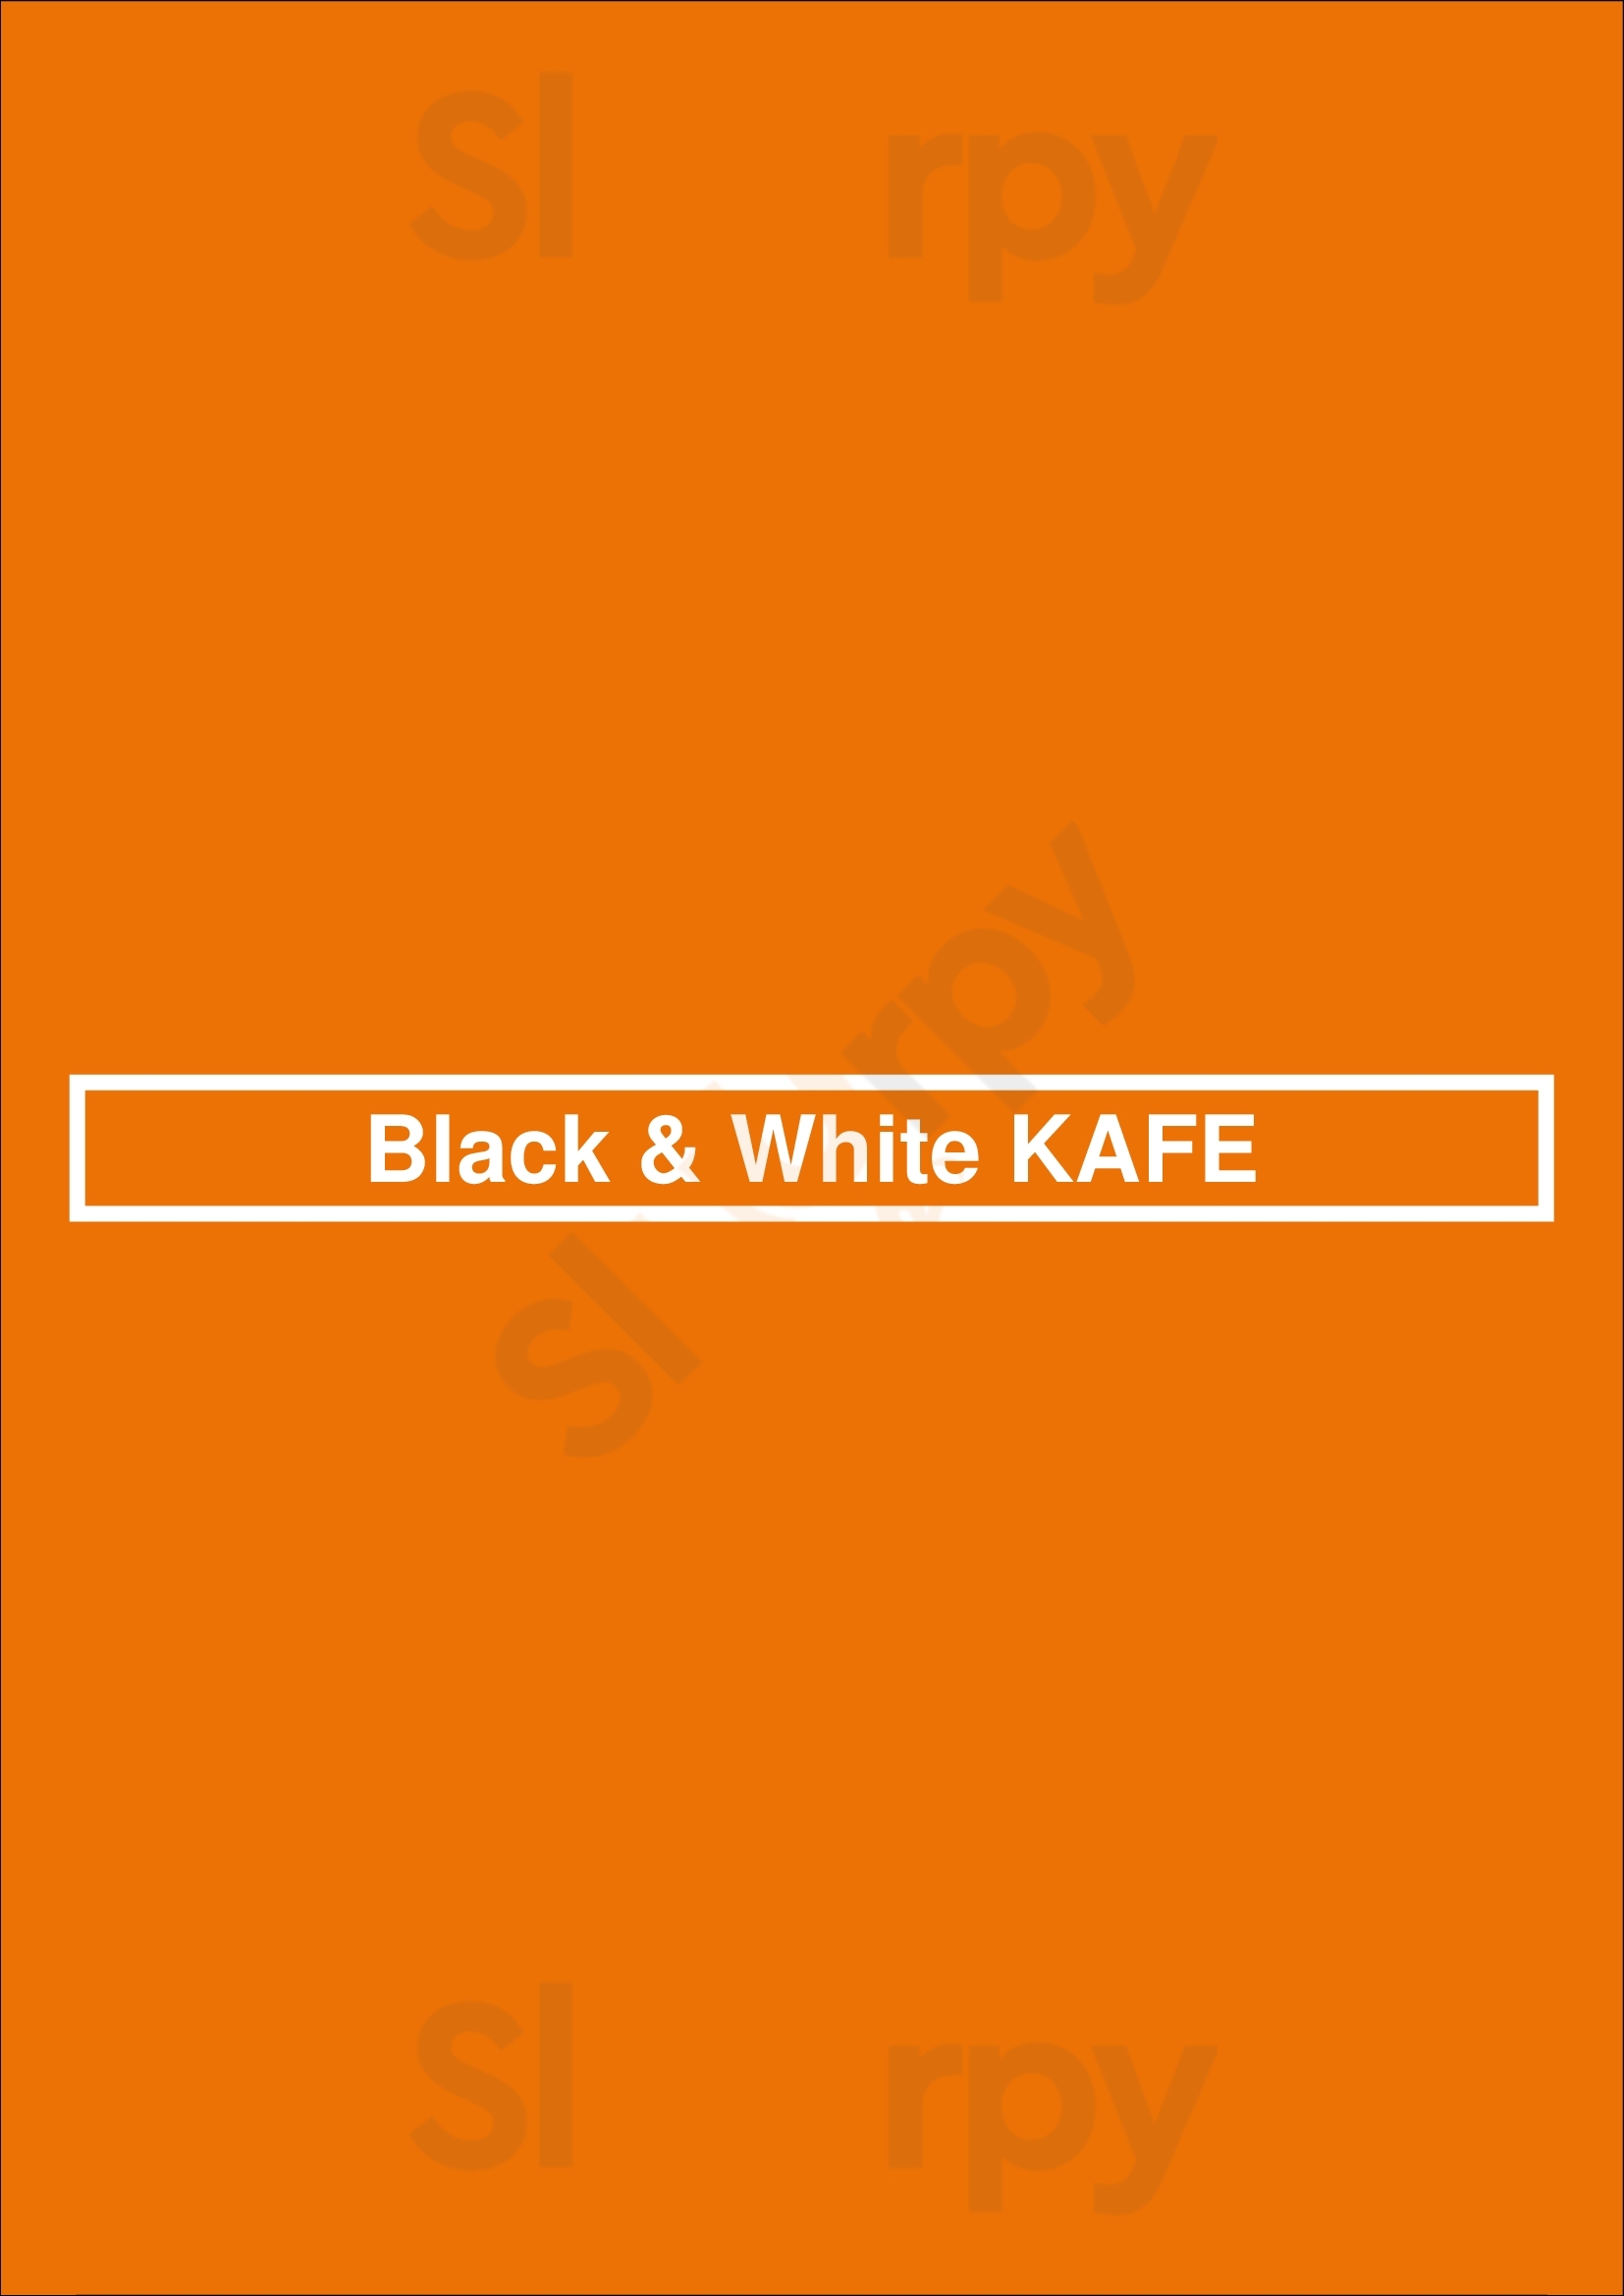 Black & White Kafe Breda Menu - 1